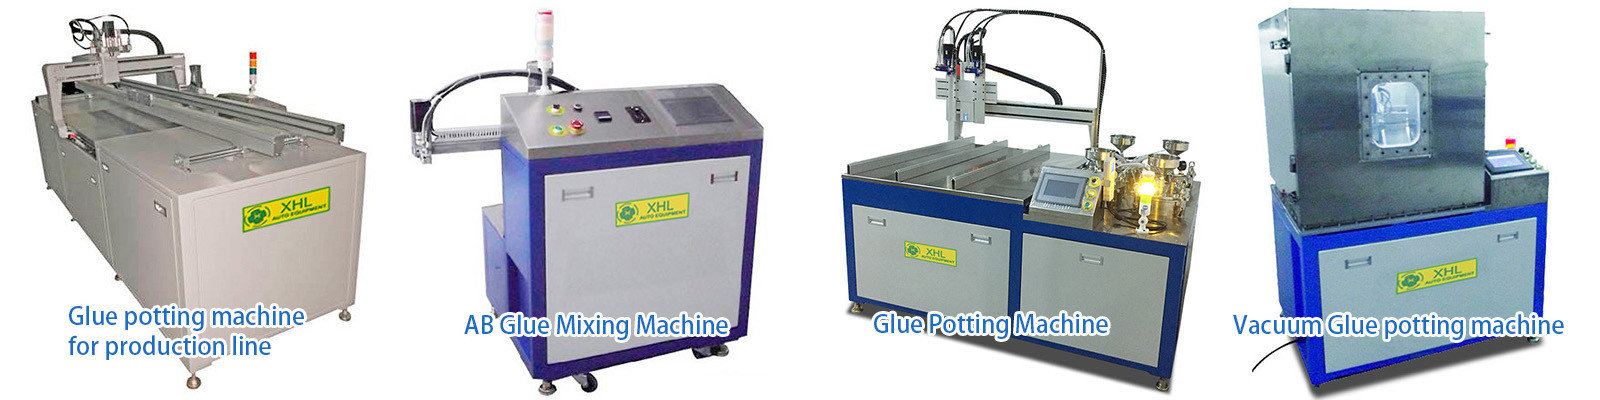 China best Automatic Glue potting machine on sales